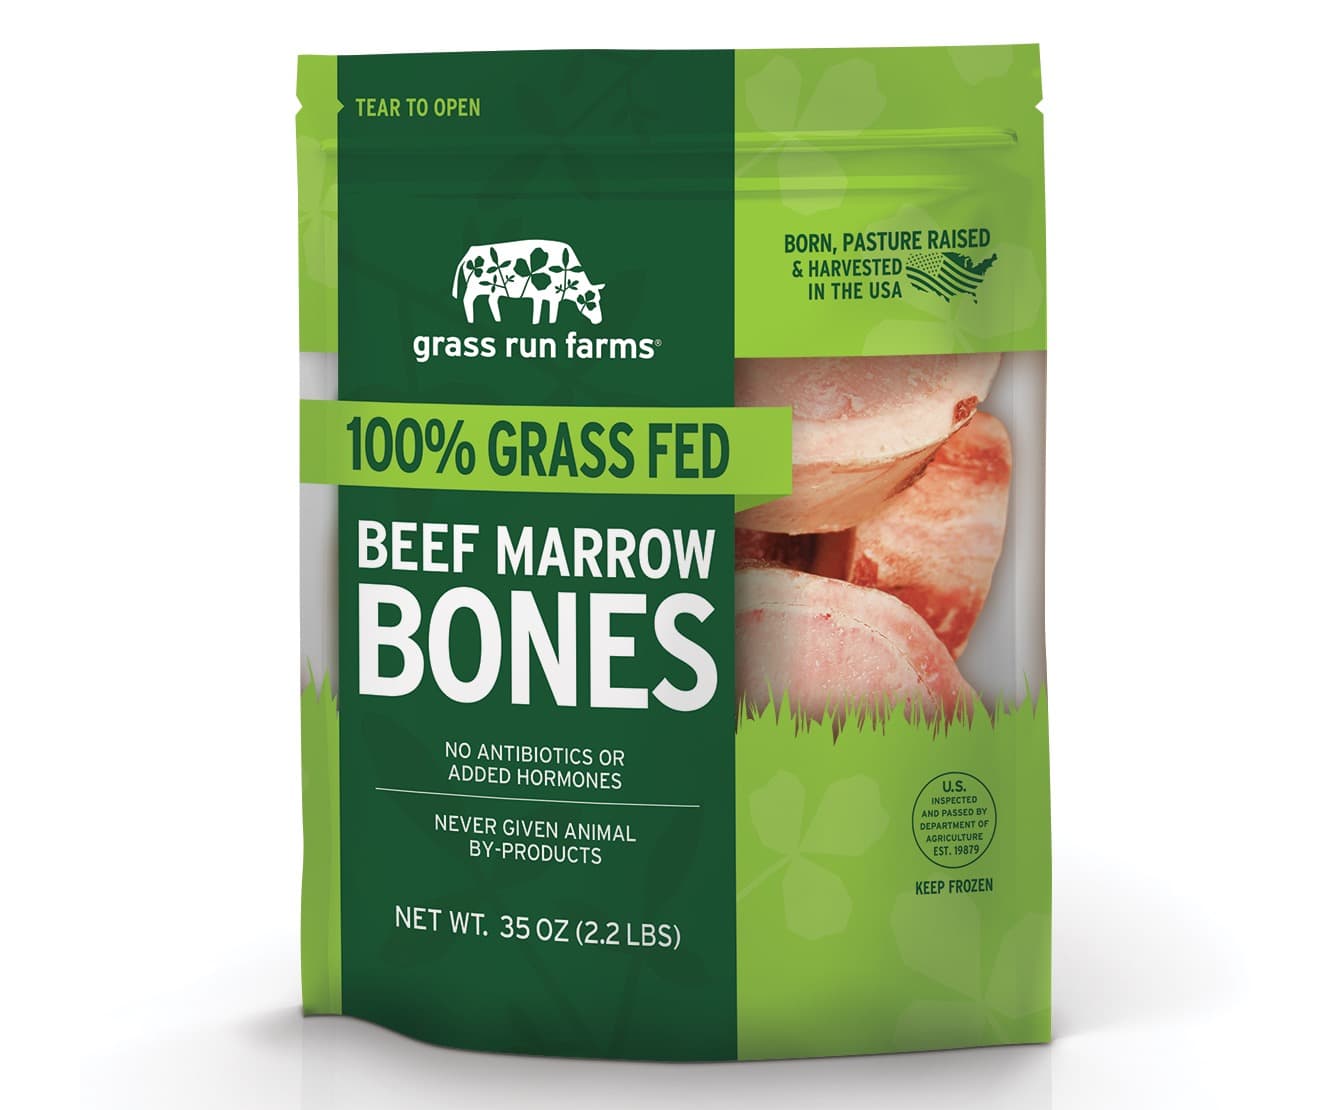 Bone marrow #bonemarrow #beef #wagyu, bone marrow